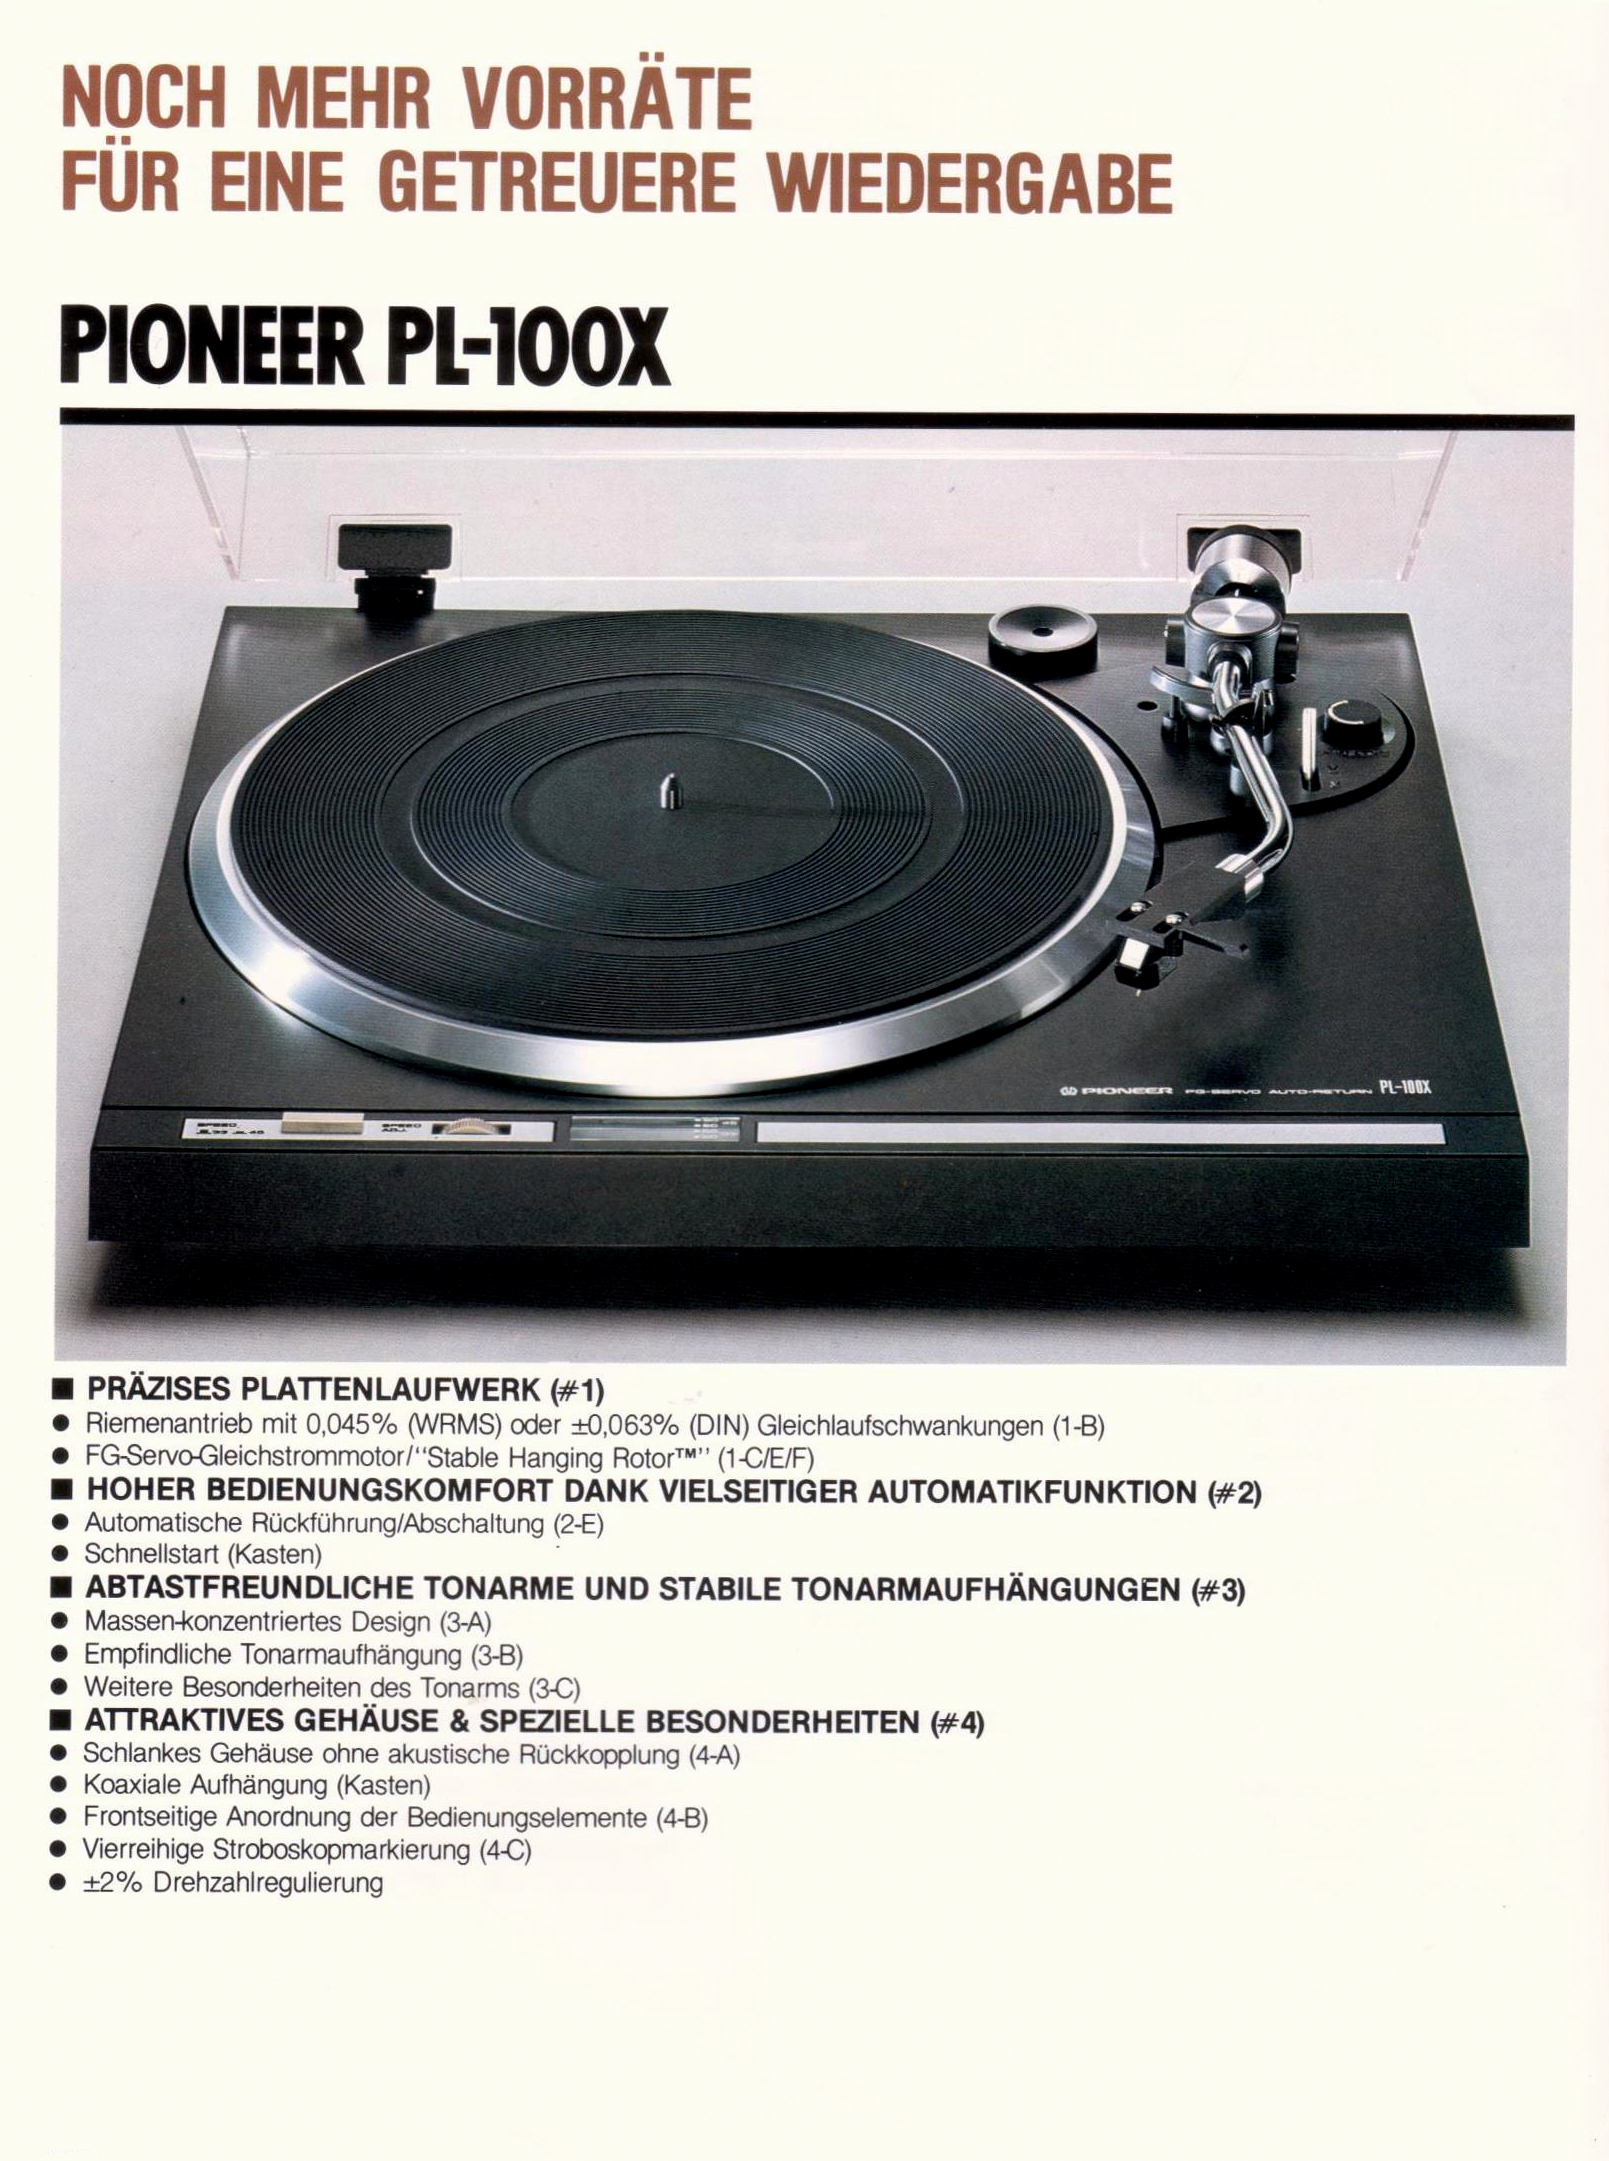 Pioneer PL-100 X-Prospekt-19801.jpg